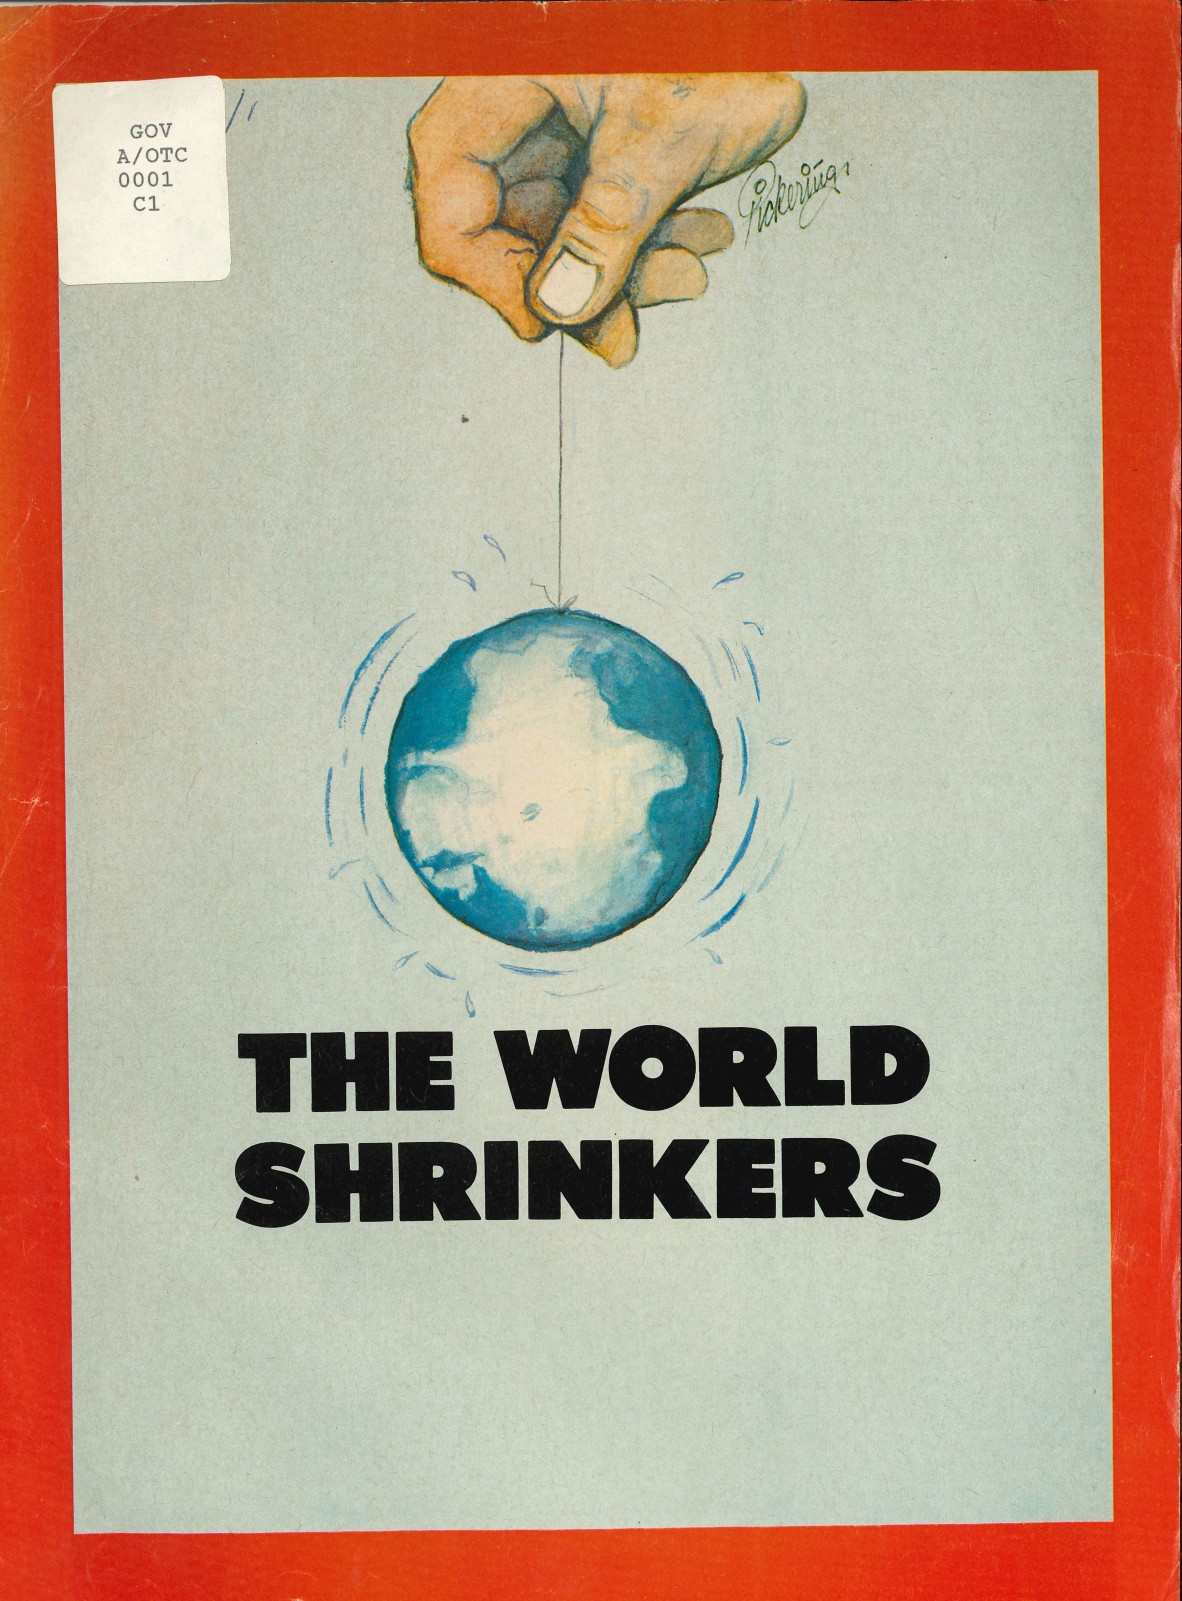 The world shrinkers